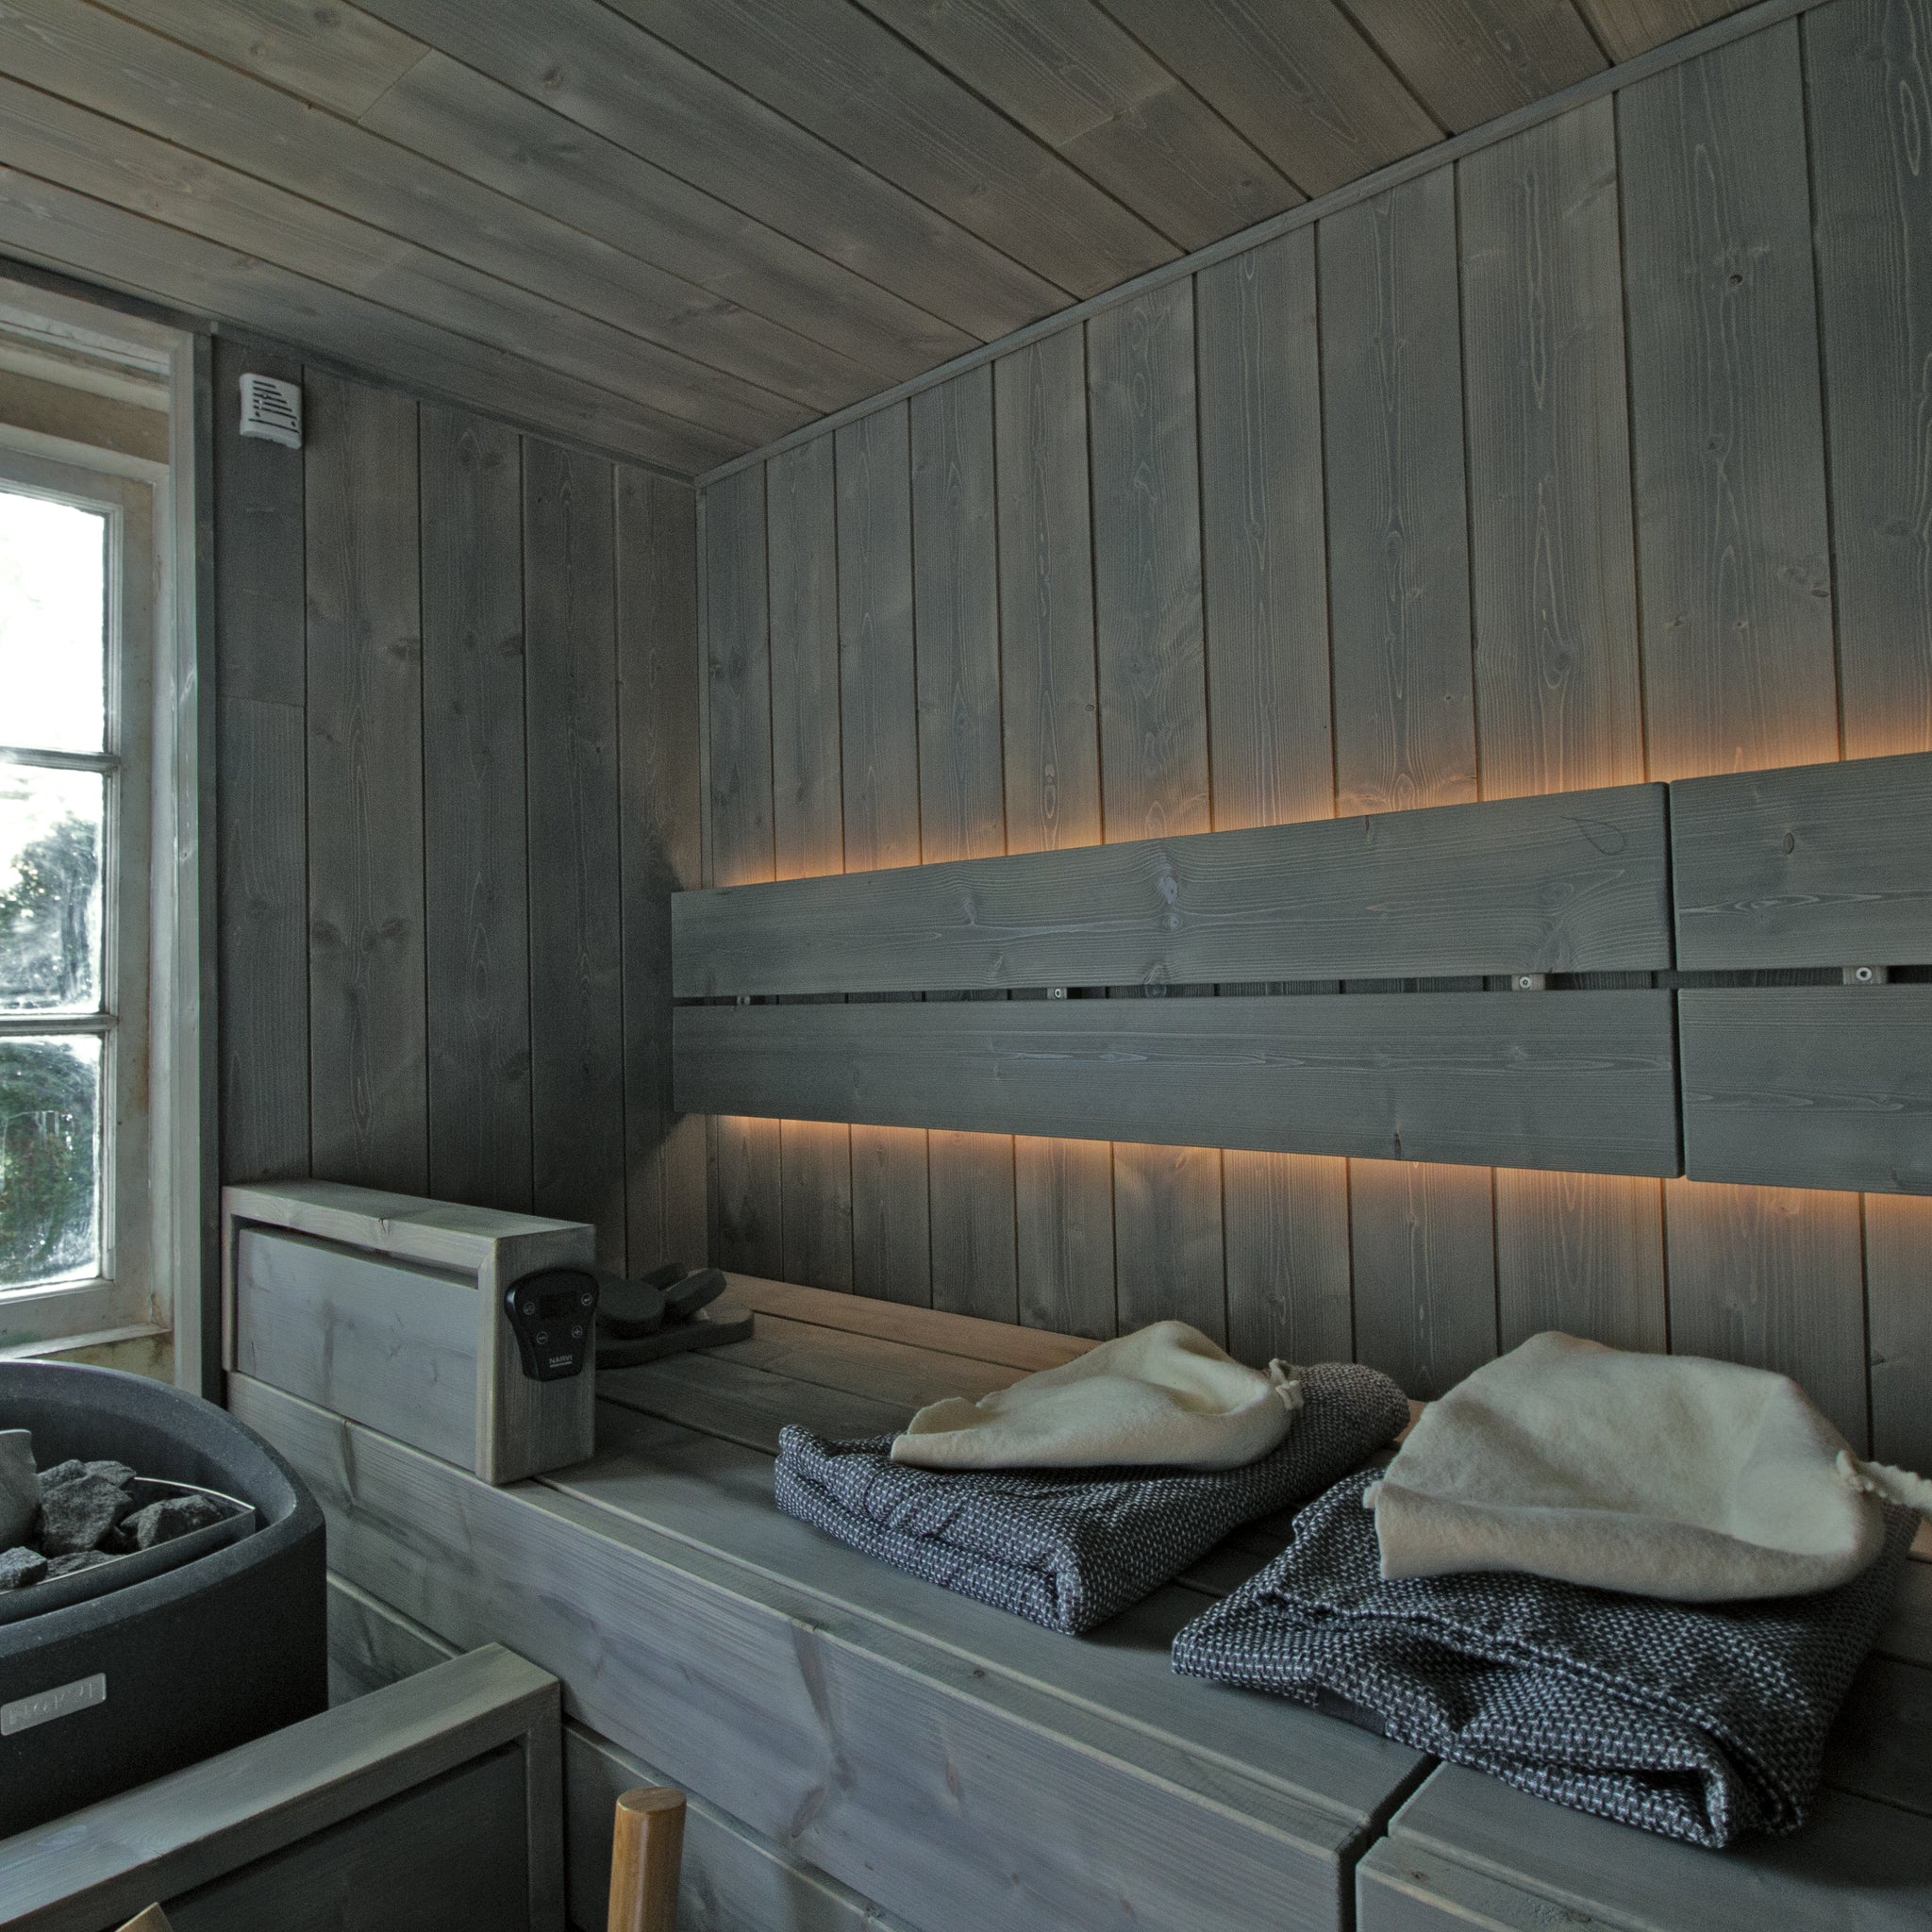 Bespoke Sauna Installation by Finnmark Sauna using brushed spruce. The sauna wood is grey due to the use of Grey Supi Sauna Wax. The sauna heater is a Narvi Trio electric sauna heater.